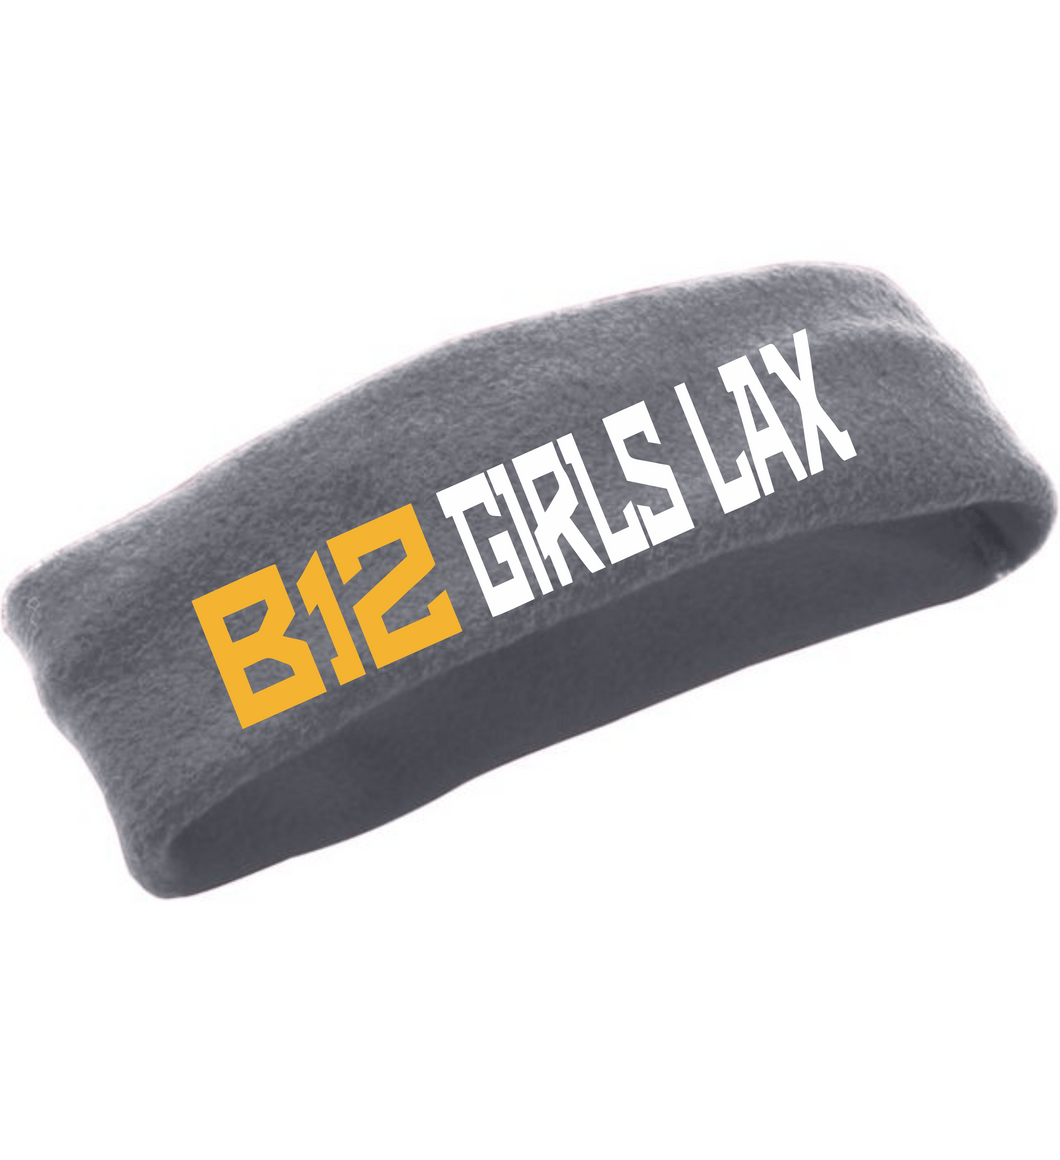 B12-LAX-901-3 - Augusta Chill Fleece/Headband/Earband - B12 Girls LAX Logo